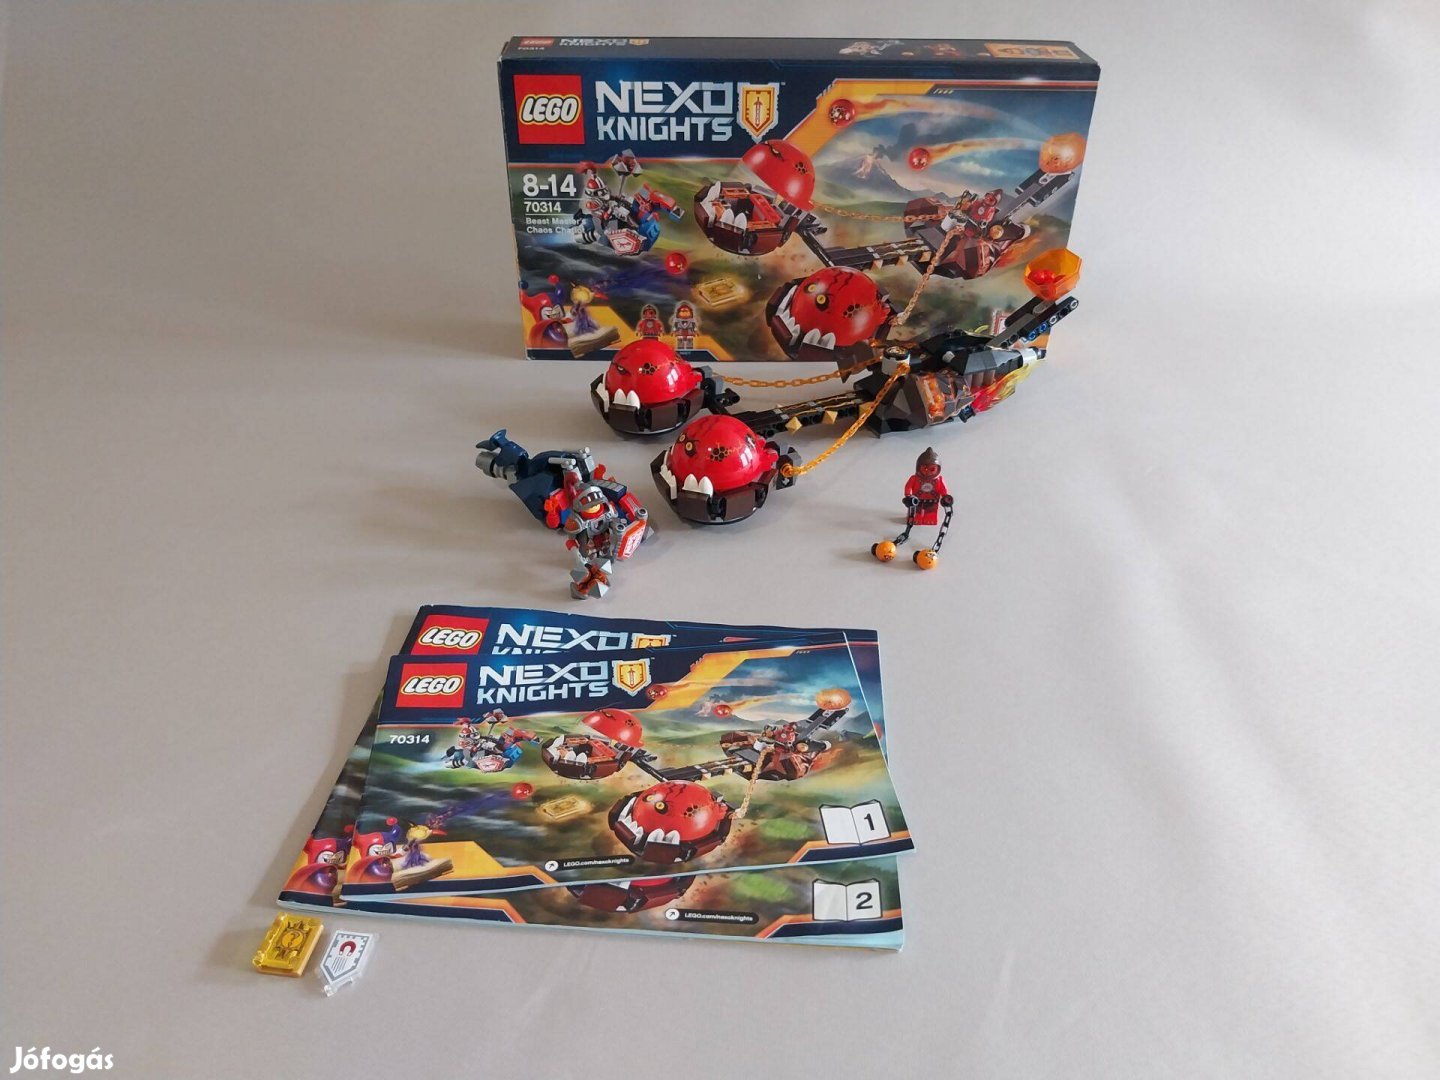 LEGO 70314 Nexo Knights Beast Master's Chaos Chariot